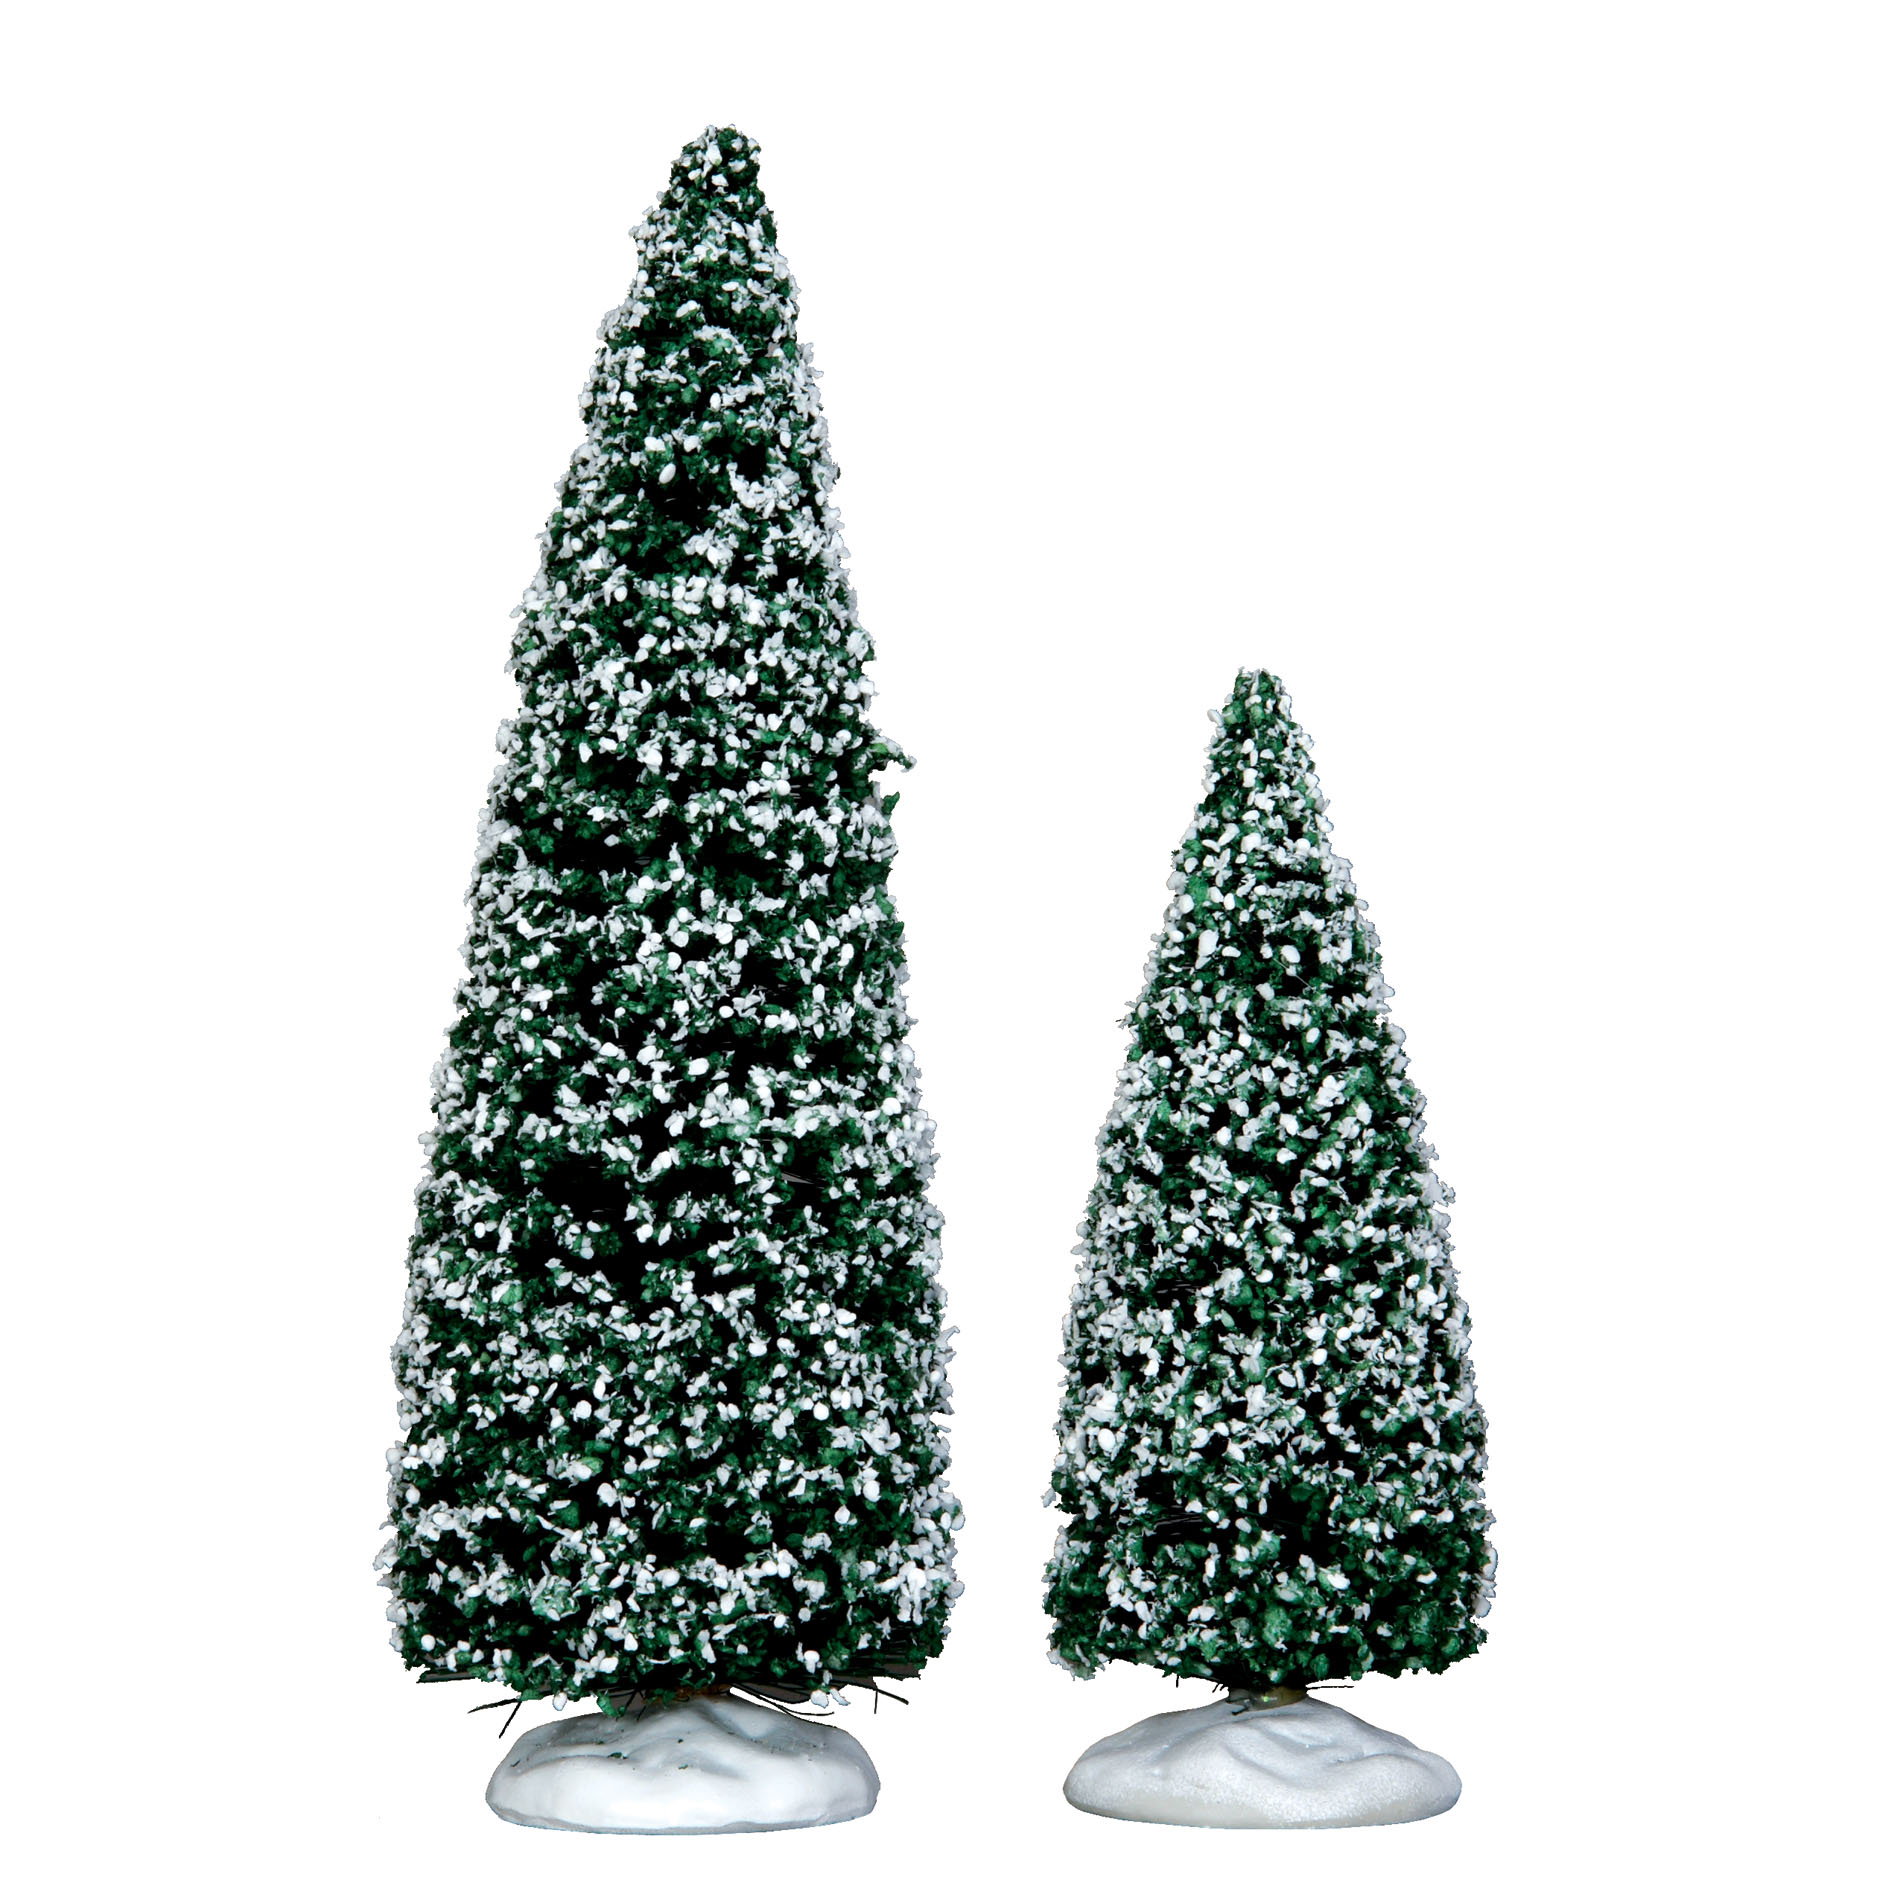 Lemax Village Collection Christmas Village Tree, Snowy Juniper Tree, Medium & Small, 2 set